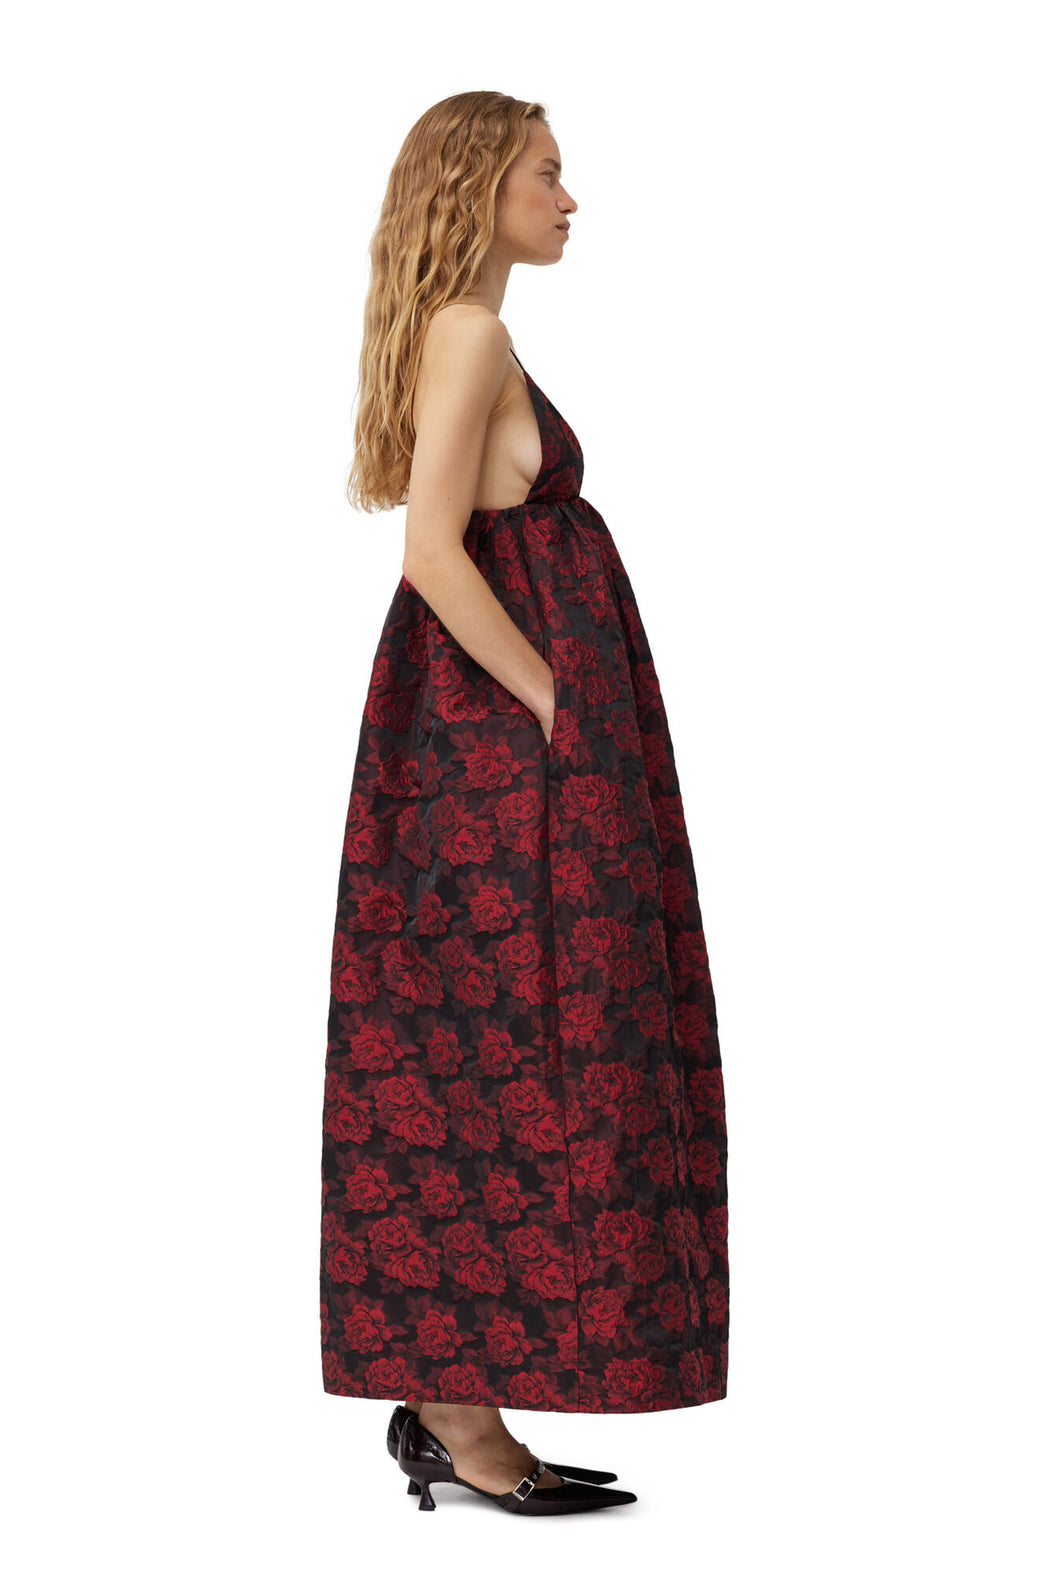 Ganni - Botanical Jacquard Long Strap Dress in High Risk Red